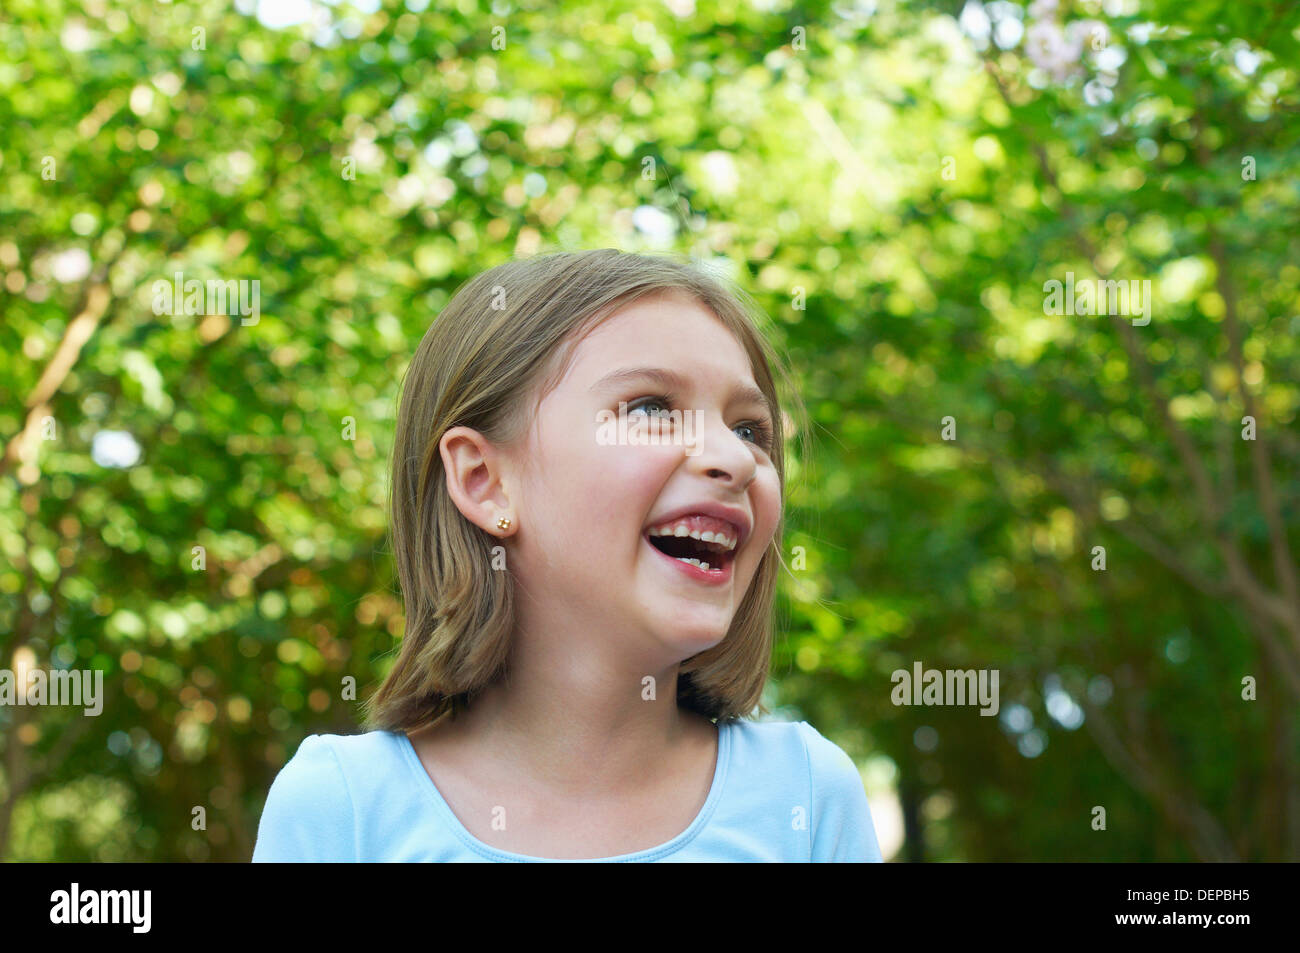 Hispanic girl laughing outdoors Stock Photo